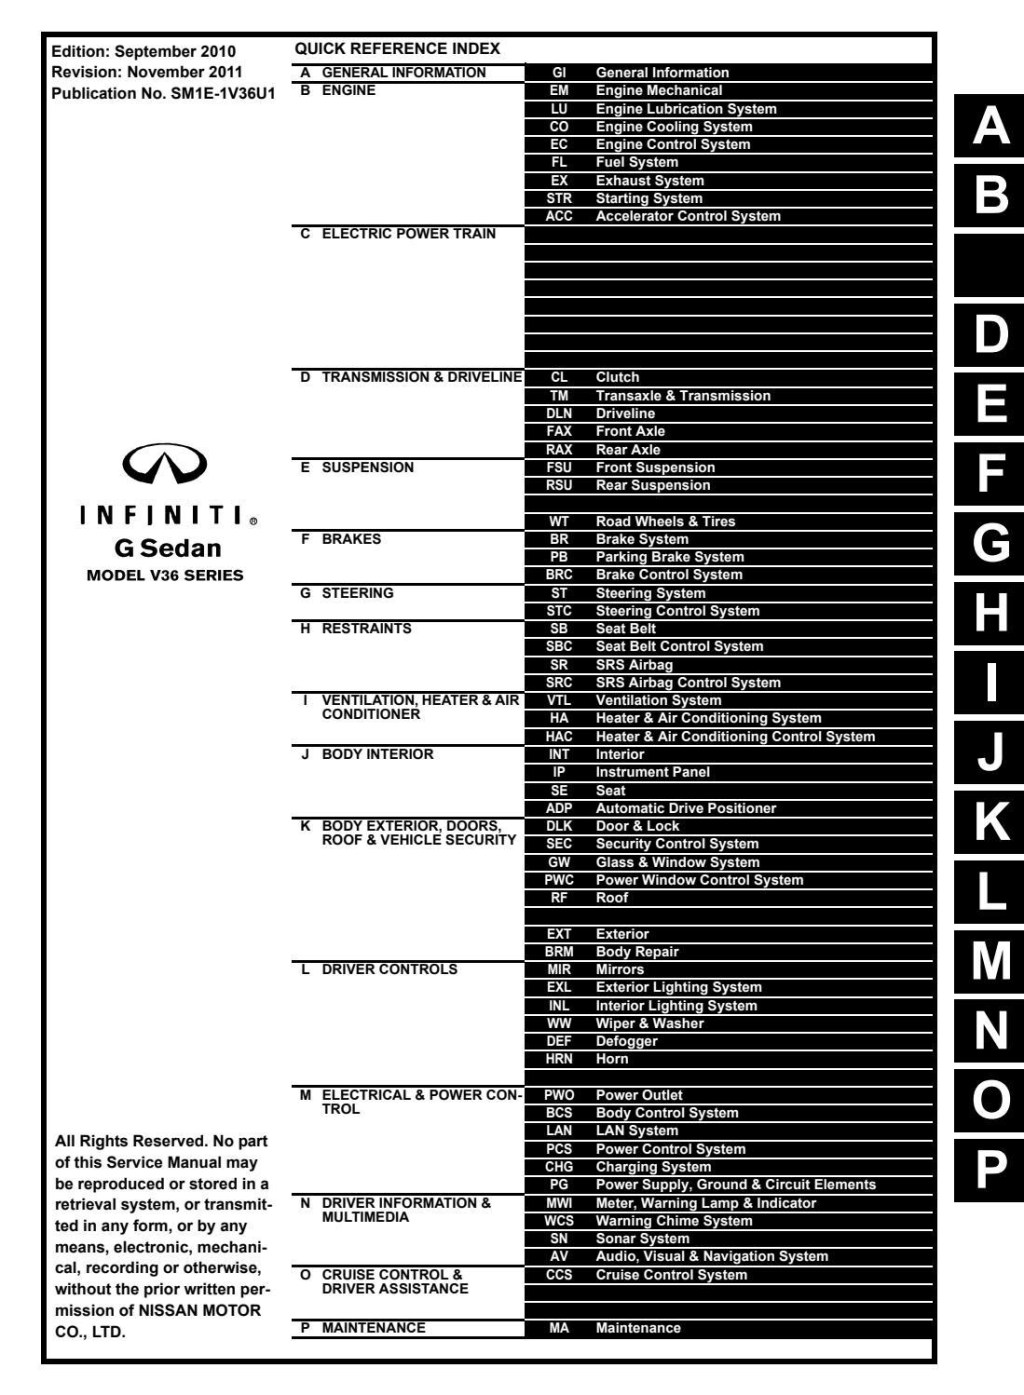 Picture of: Infiniti G Sedan Service Repair Manual by fsediid – Issuu